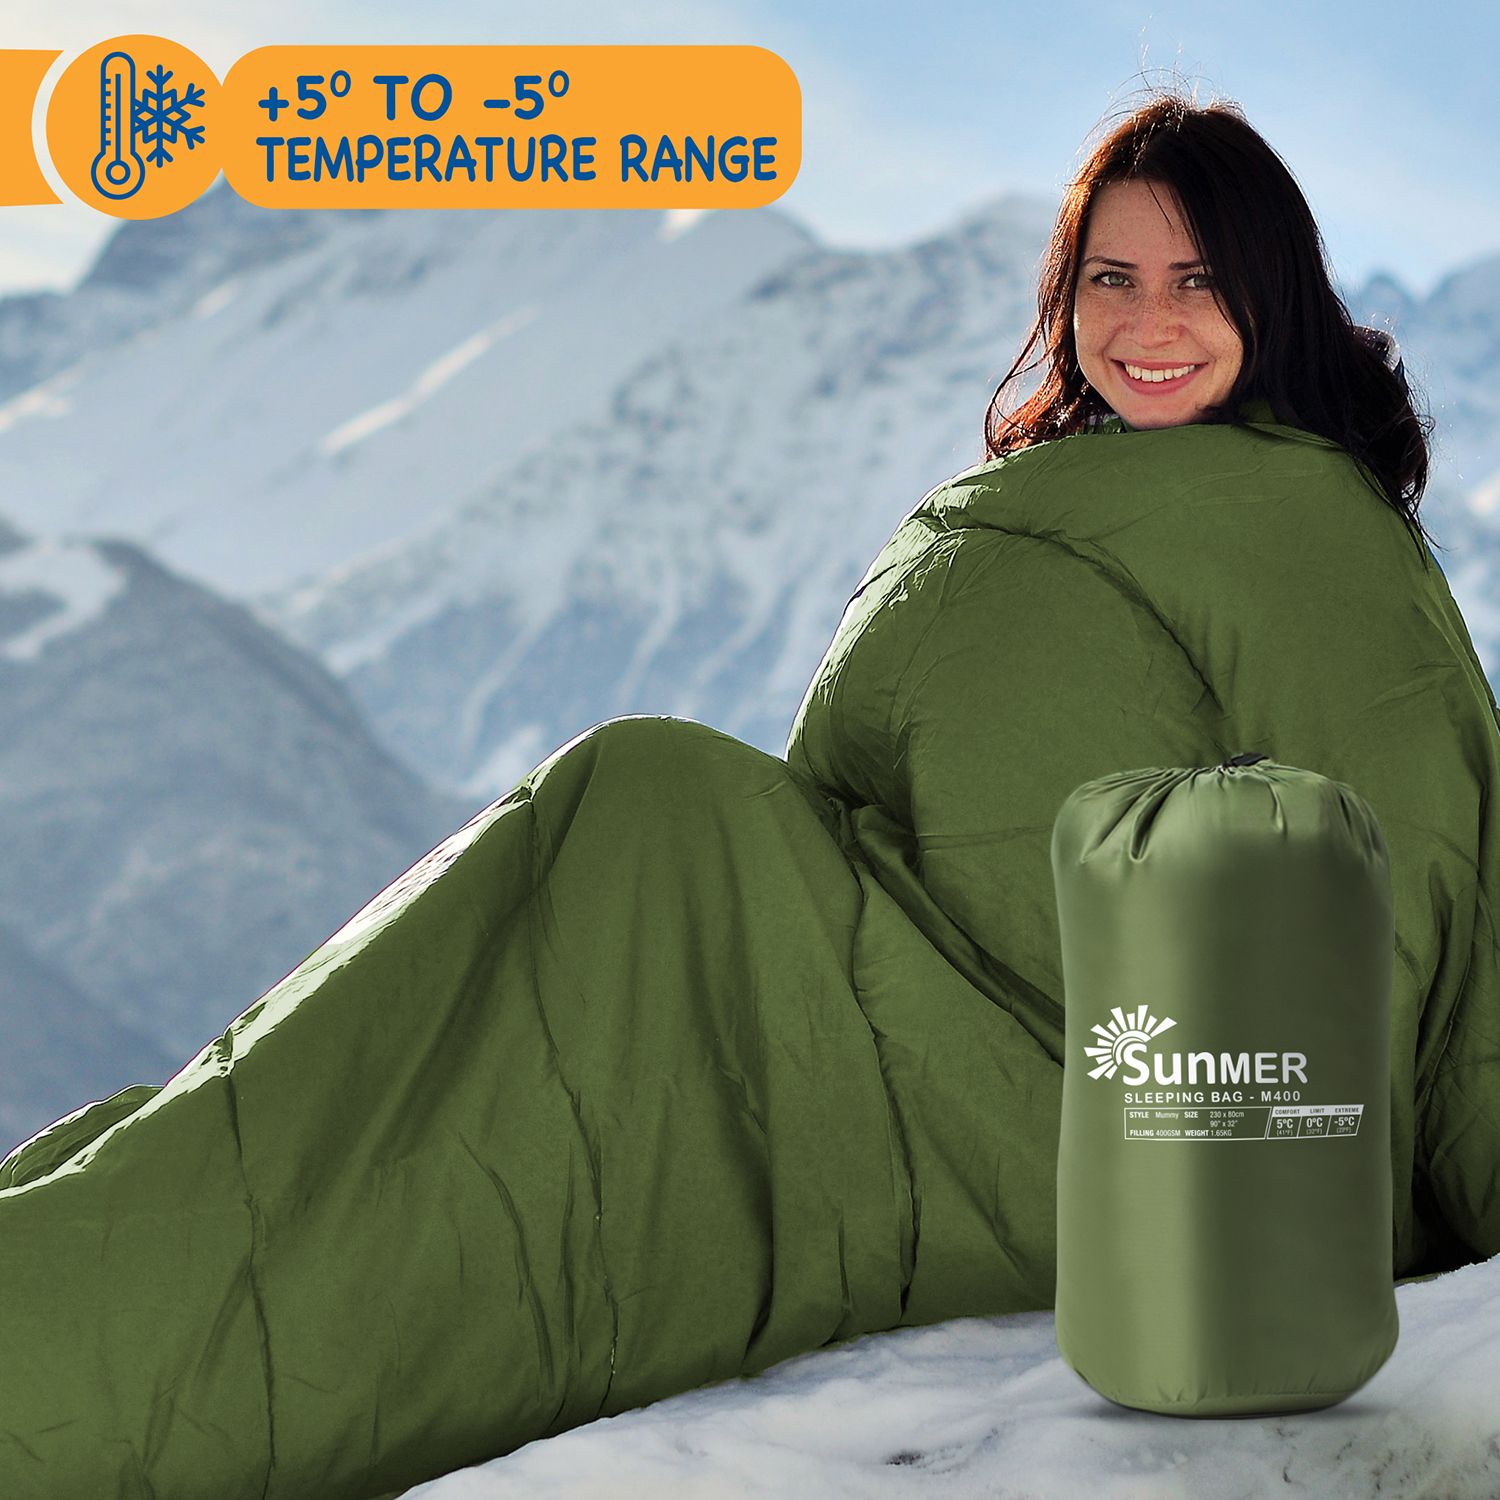 SUNMER 4 Season Mummy Sleeping Bag 400 gsm Extra Warm - Green